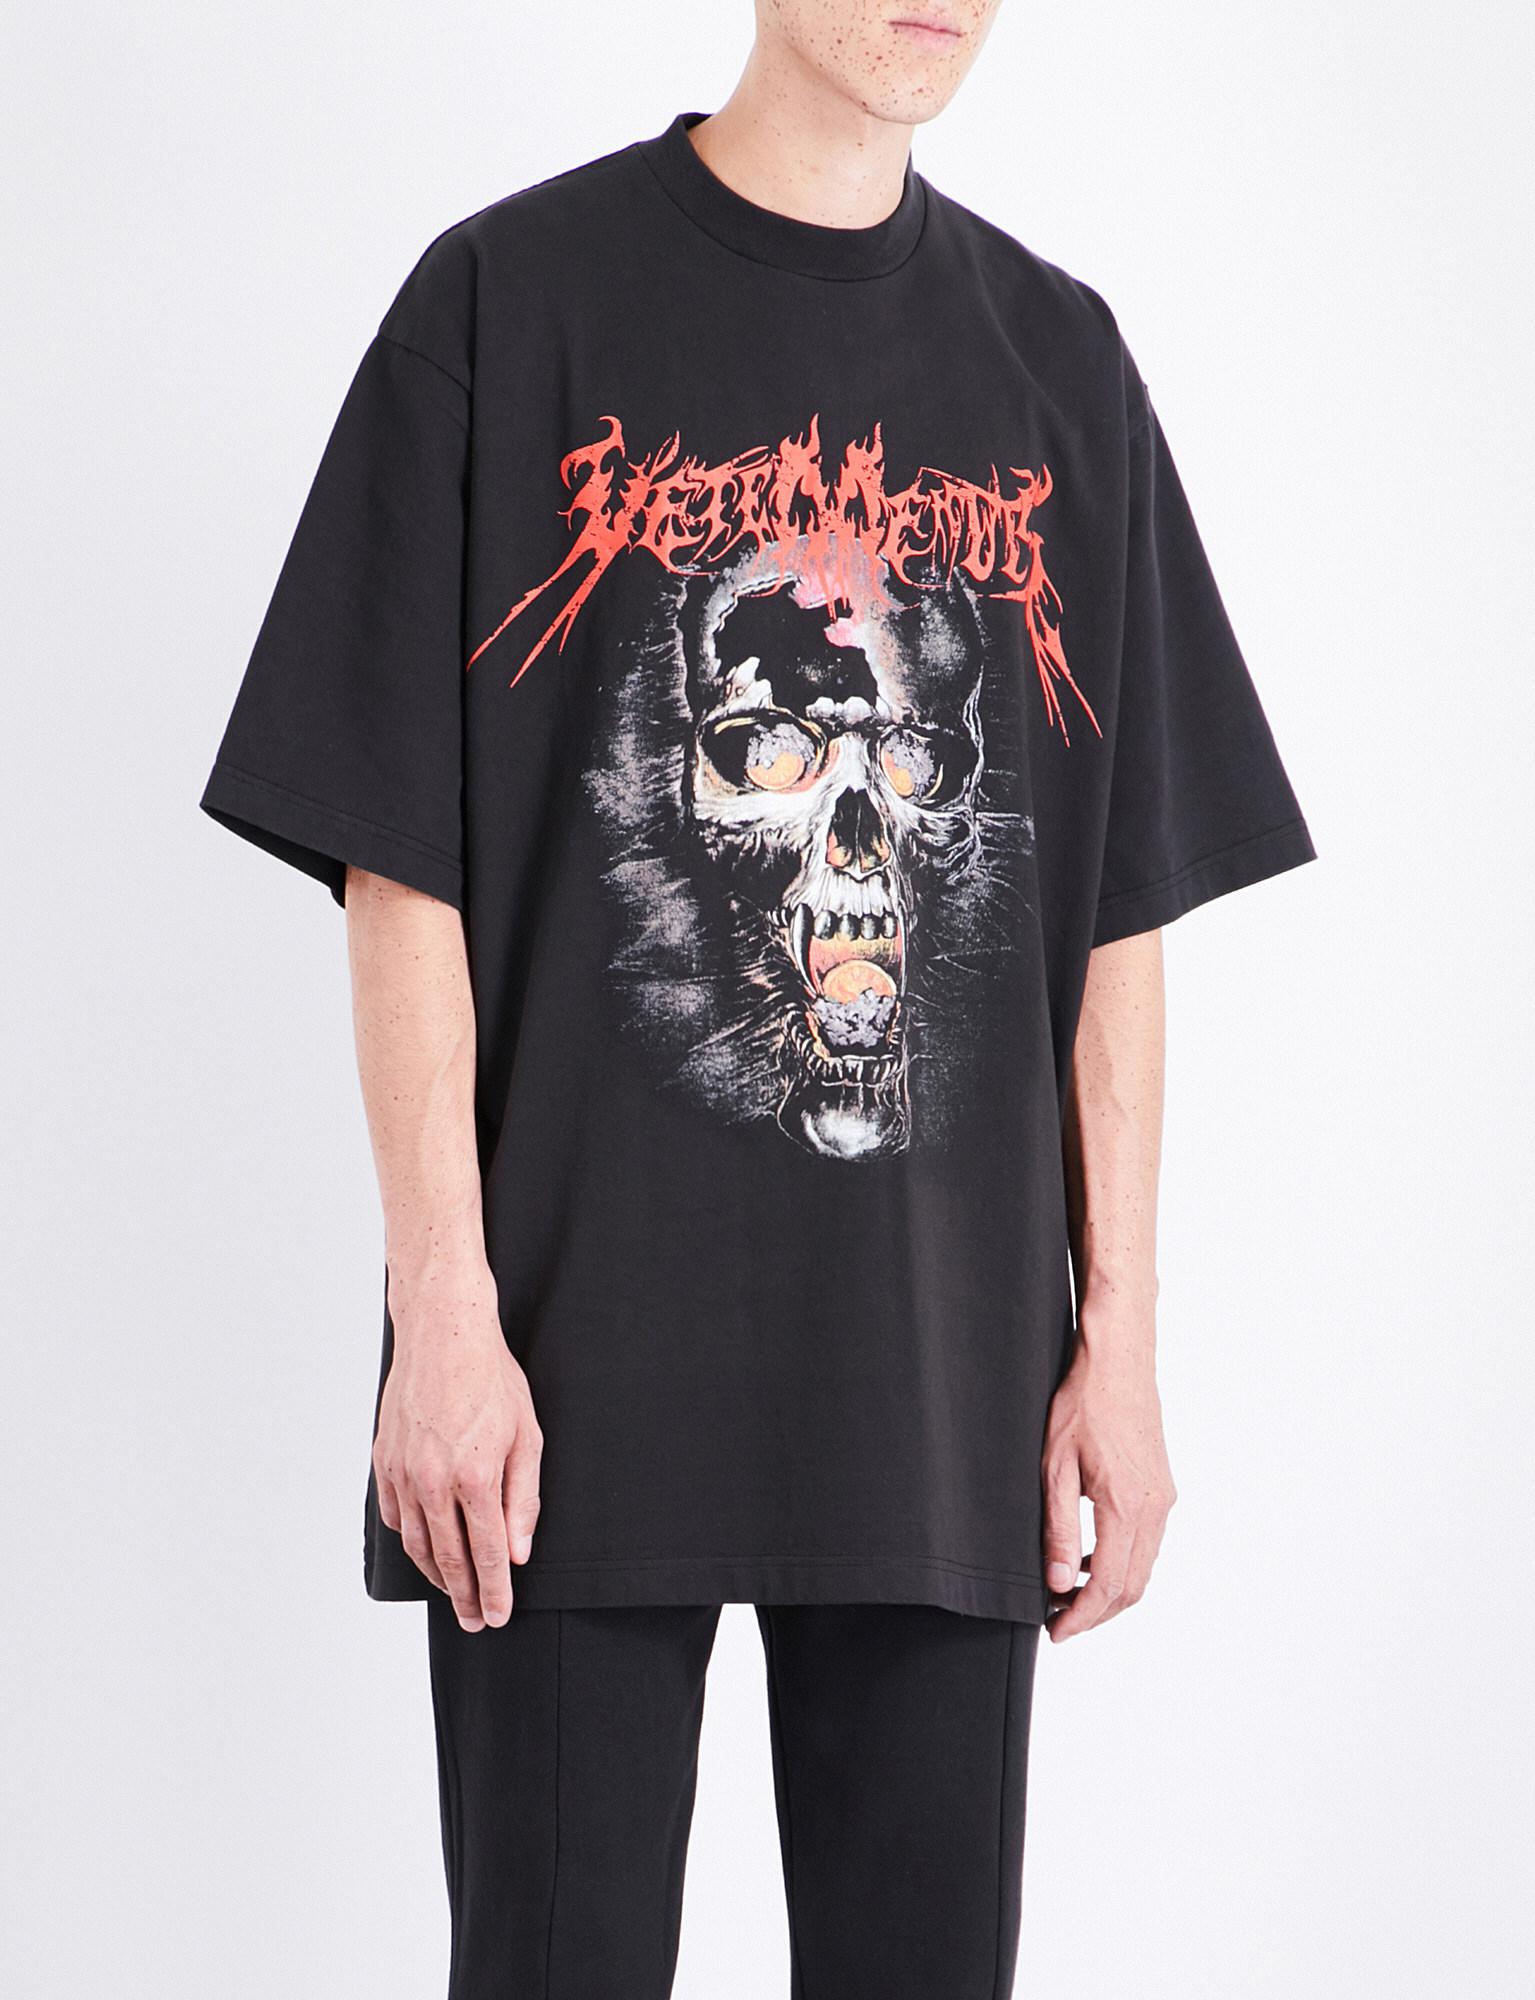 Vetements Heavy Metal Cotton-jersey T-shirt in Black for Men | Lyst